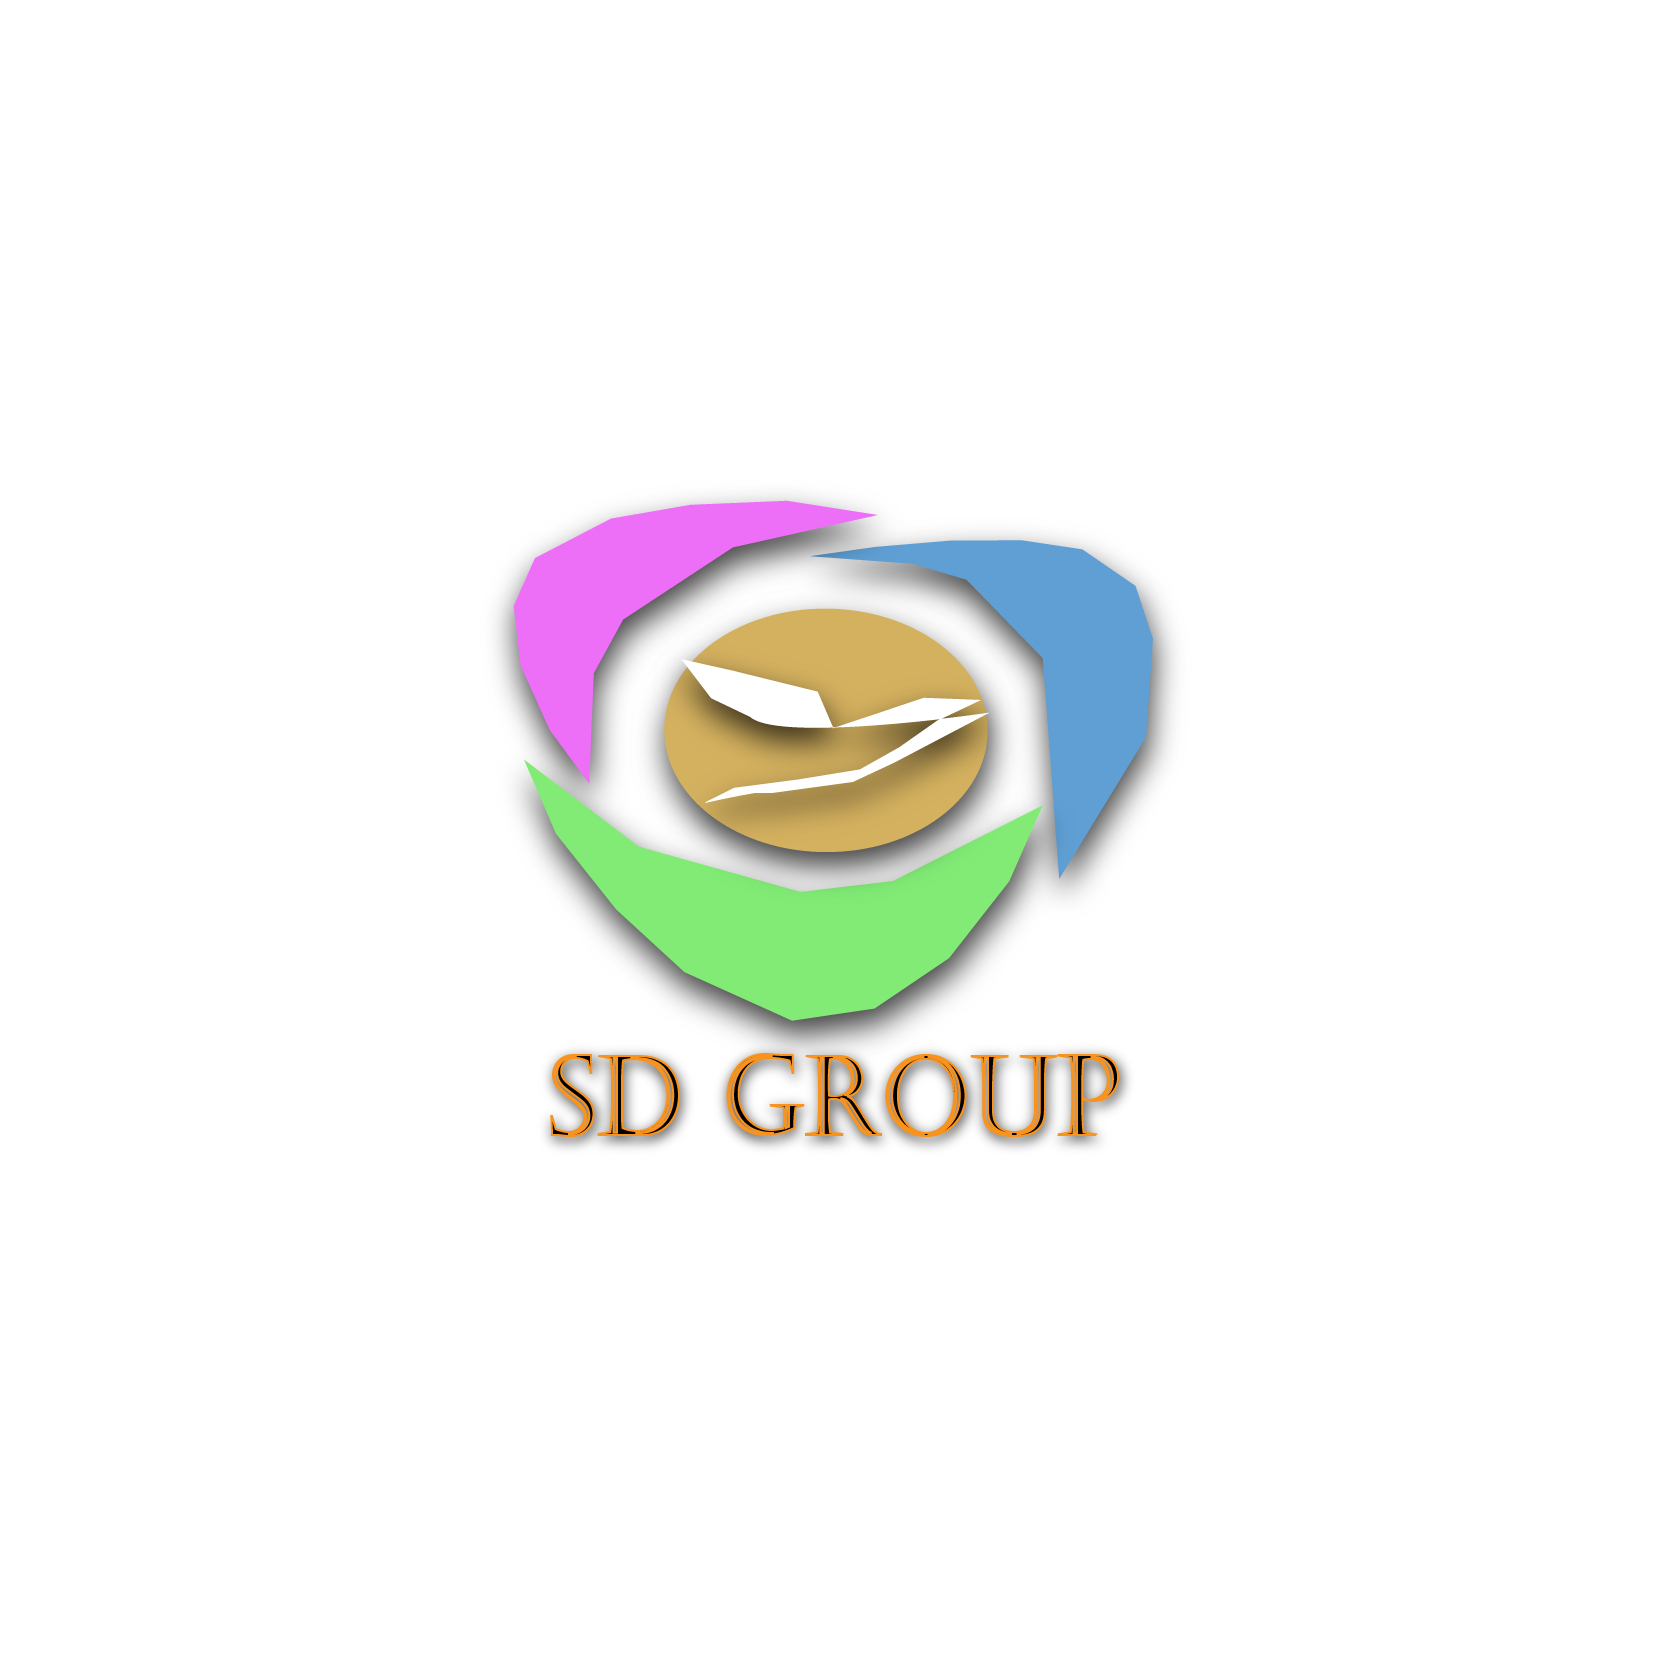 Professional logo design for business endeavor or commercial undertaking